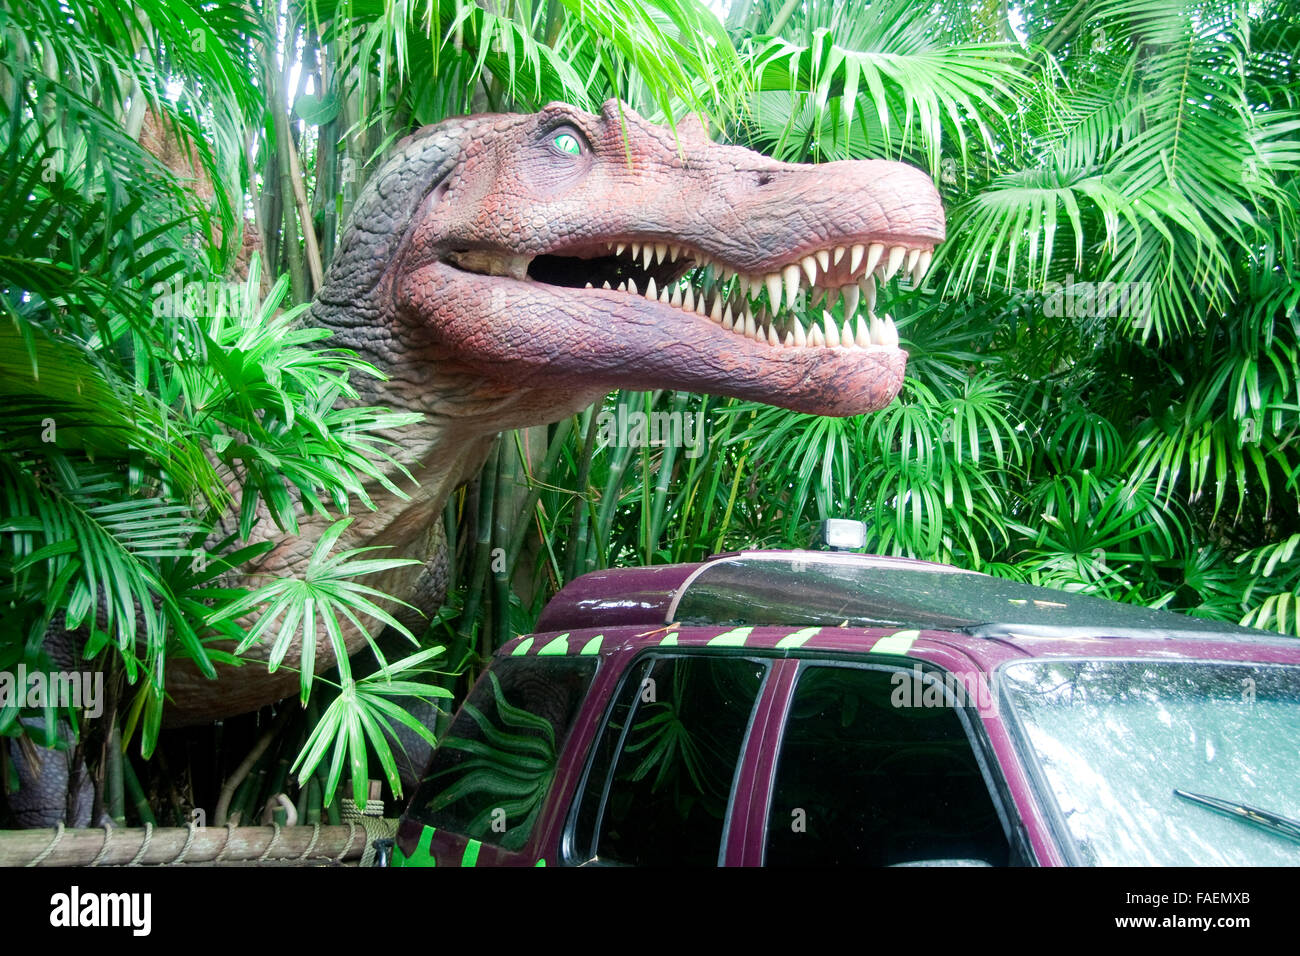 https://c8.alamy.com/comp/FAEMXB/jurassic-park-dinosaur-at-universal-studio-orlando-FAEMXB.jpg